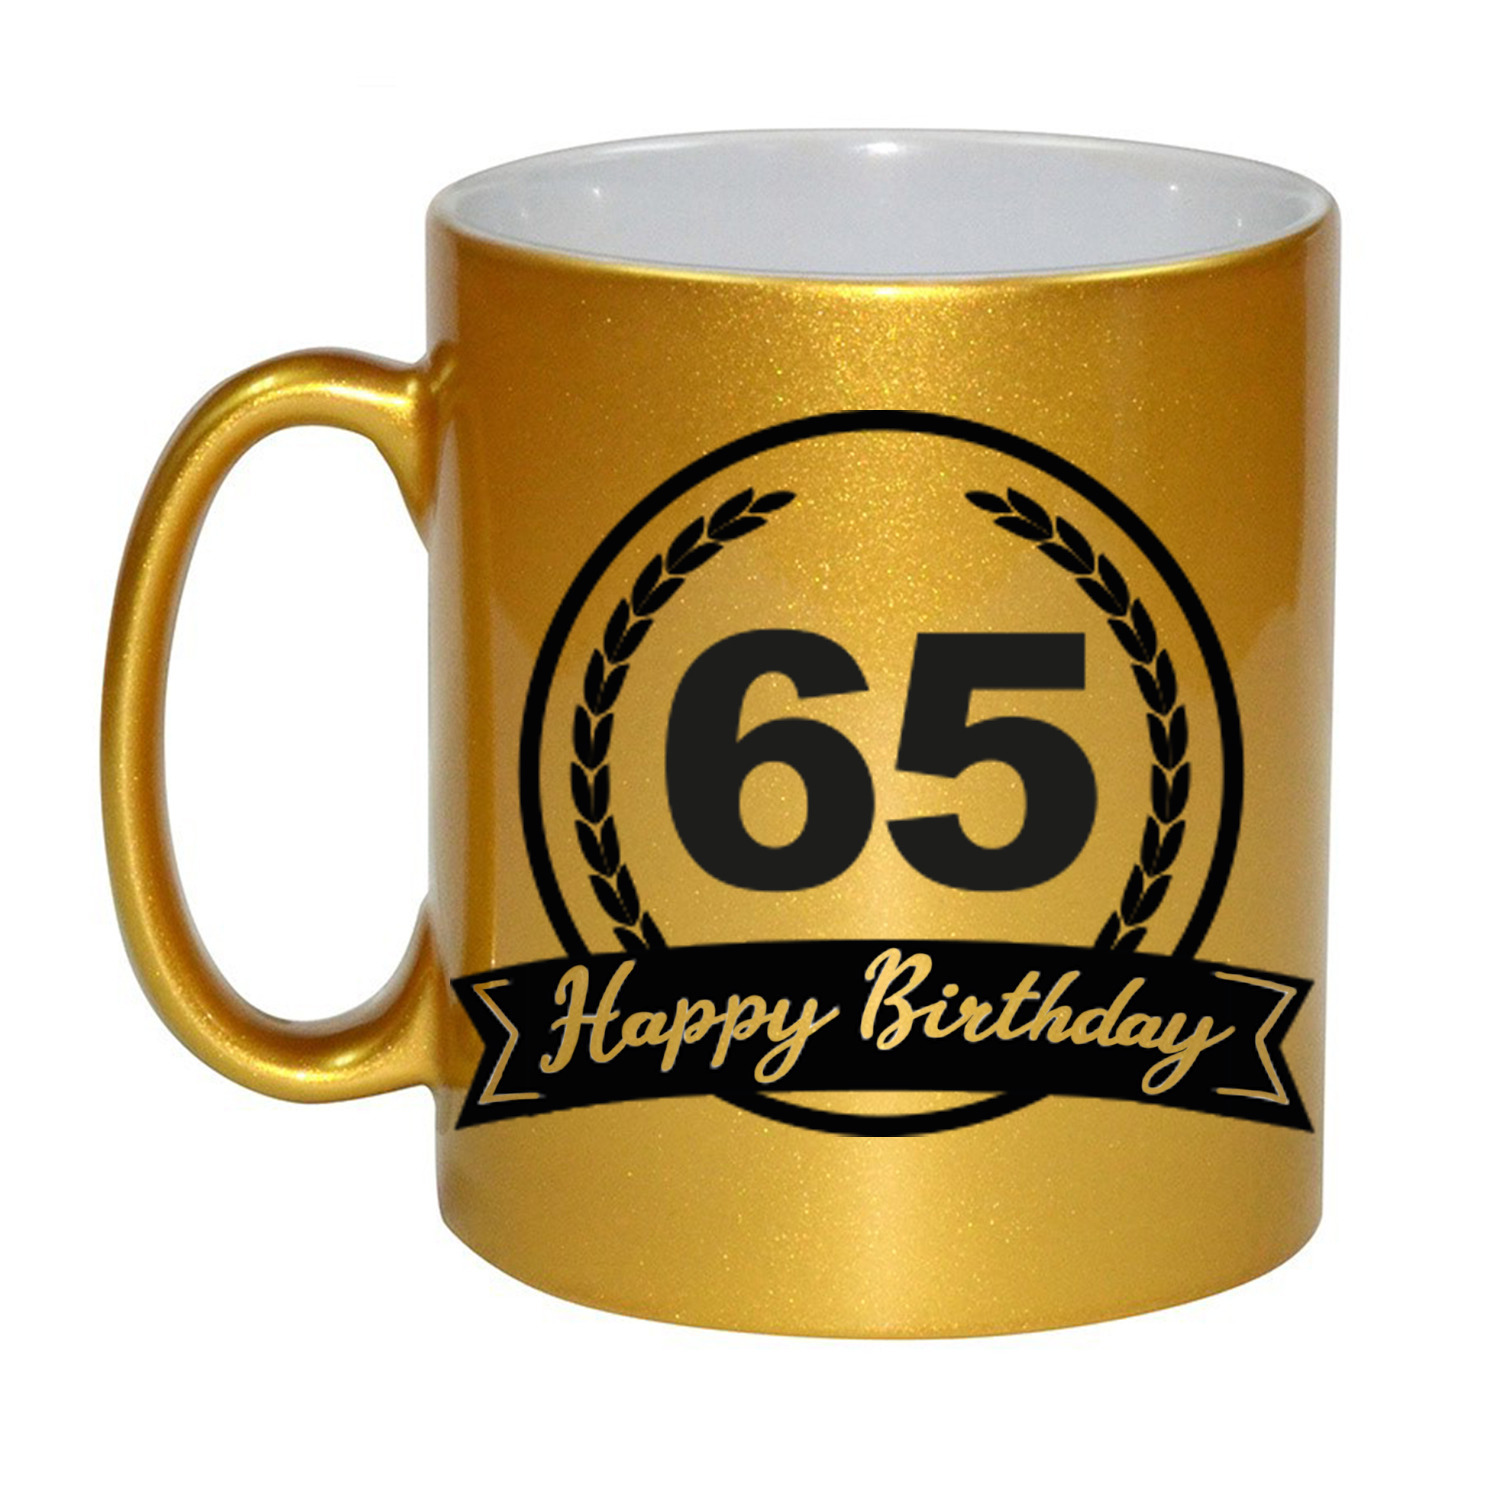 Happy Birthday 65 years gouden cadeau mok-beker met wimpel 330 ml